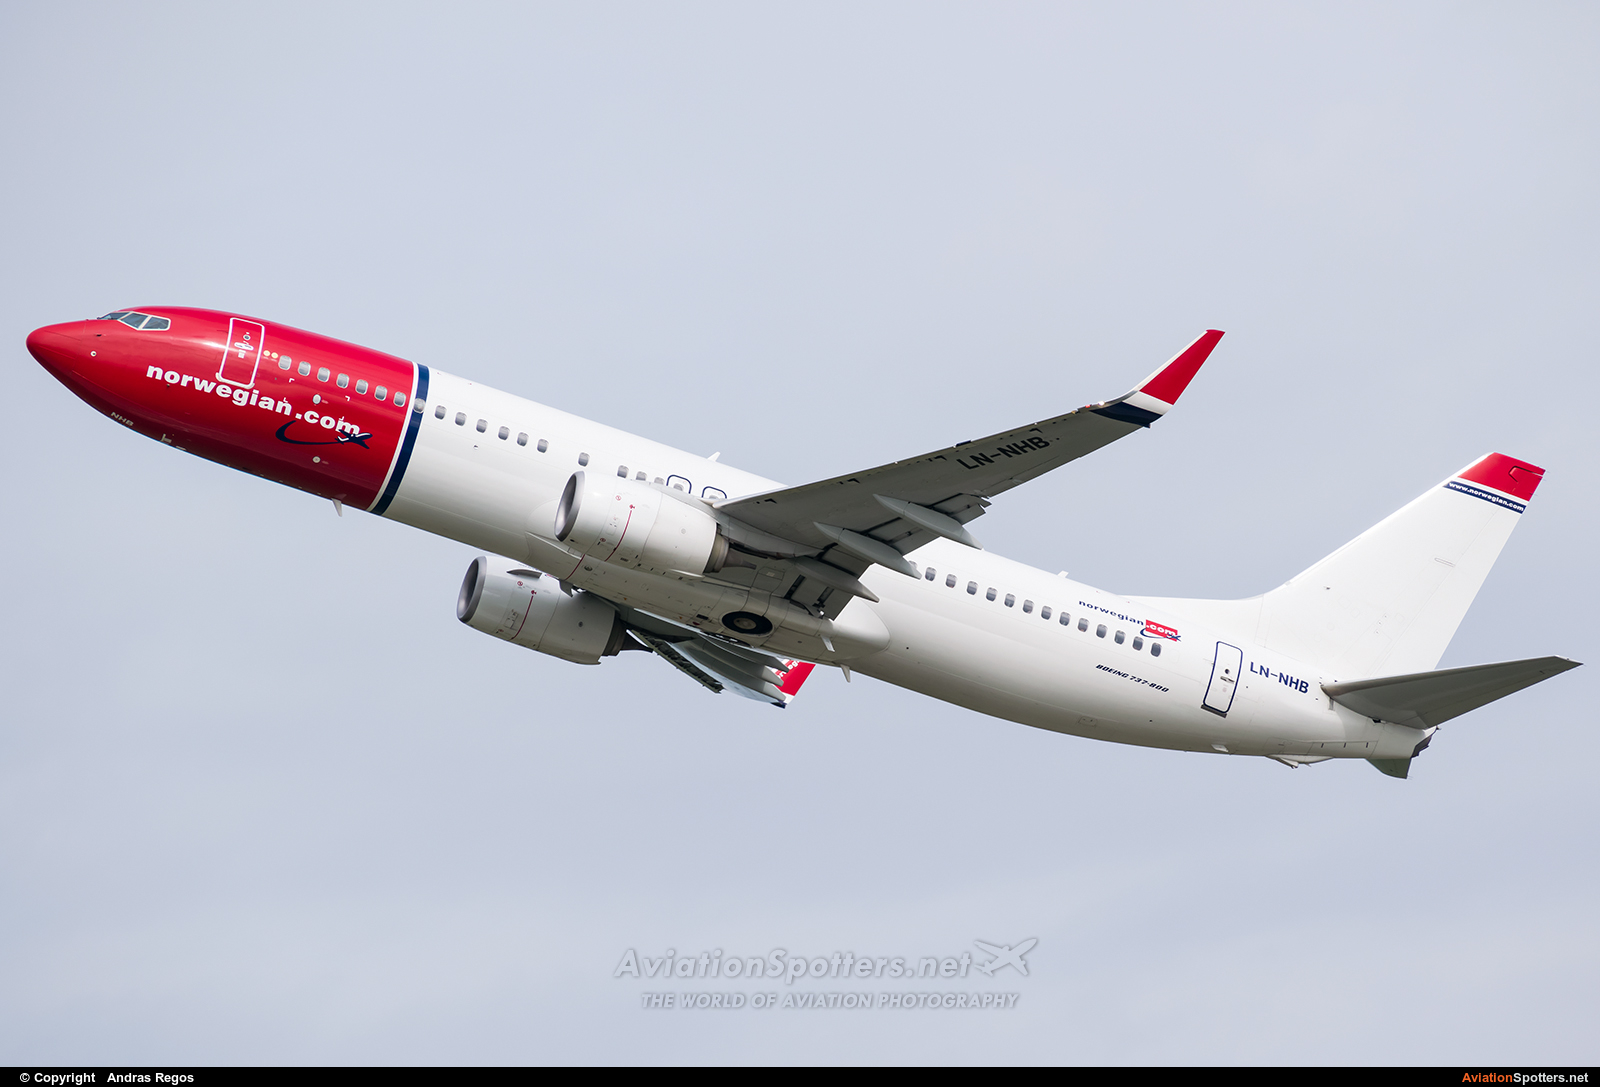 Norwegian Air Shuttle  -  737-800  (LN-NHB) By Andras Regos (regos)